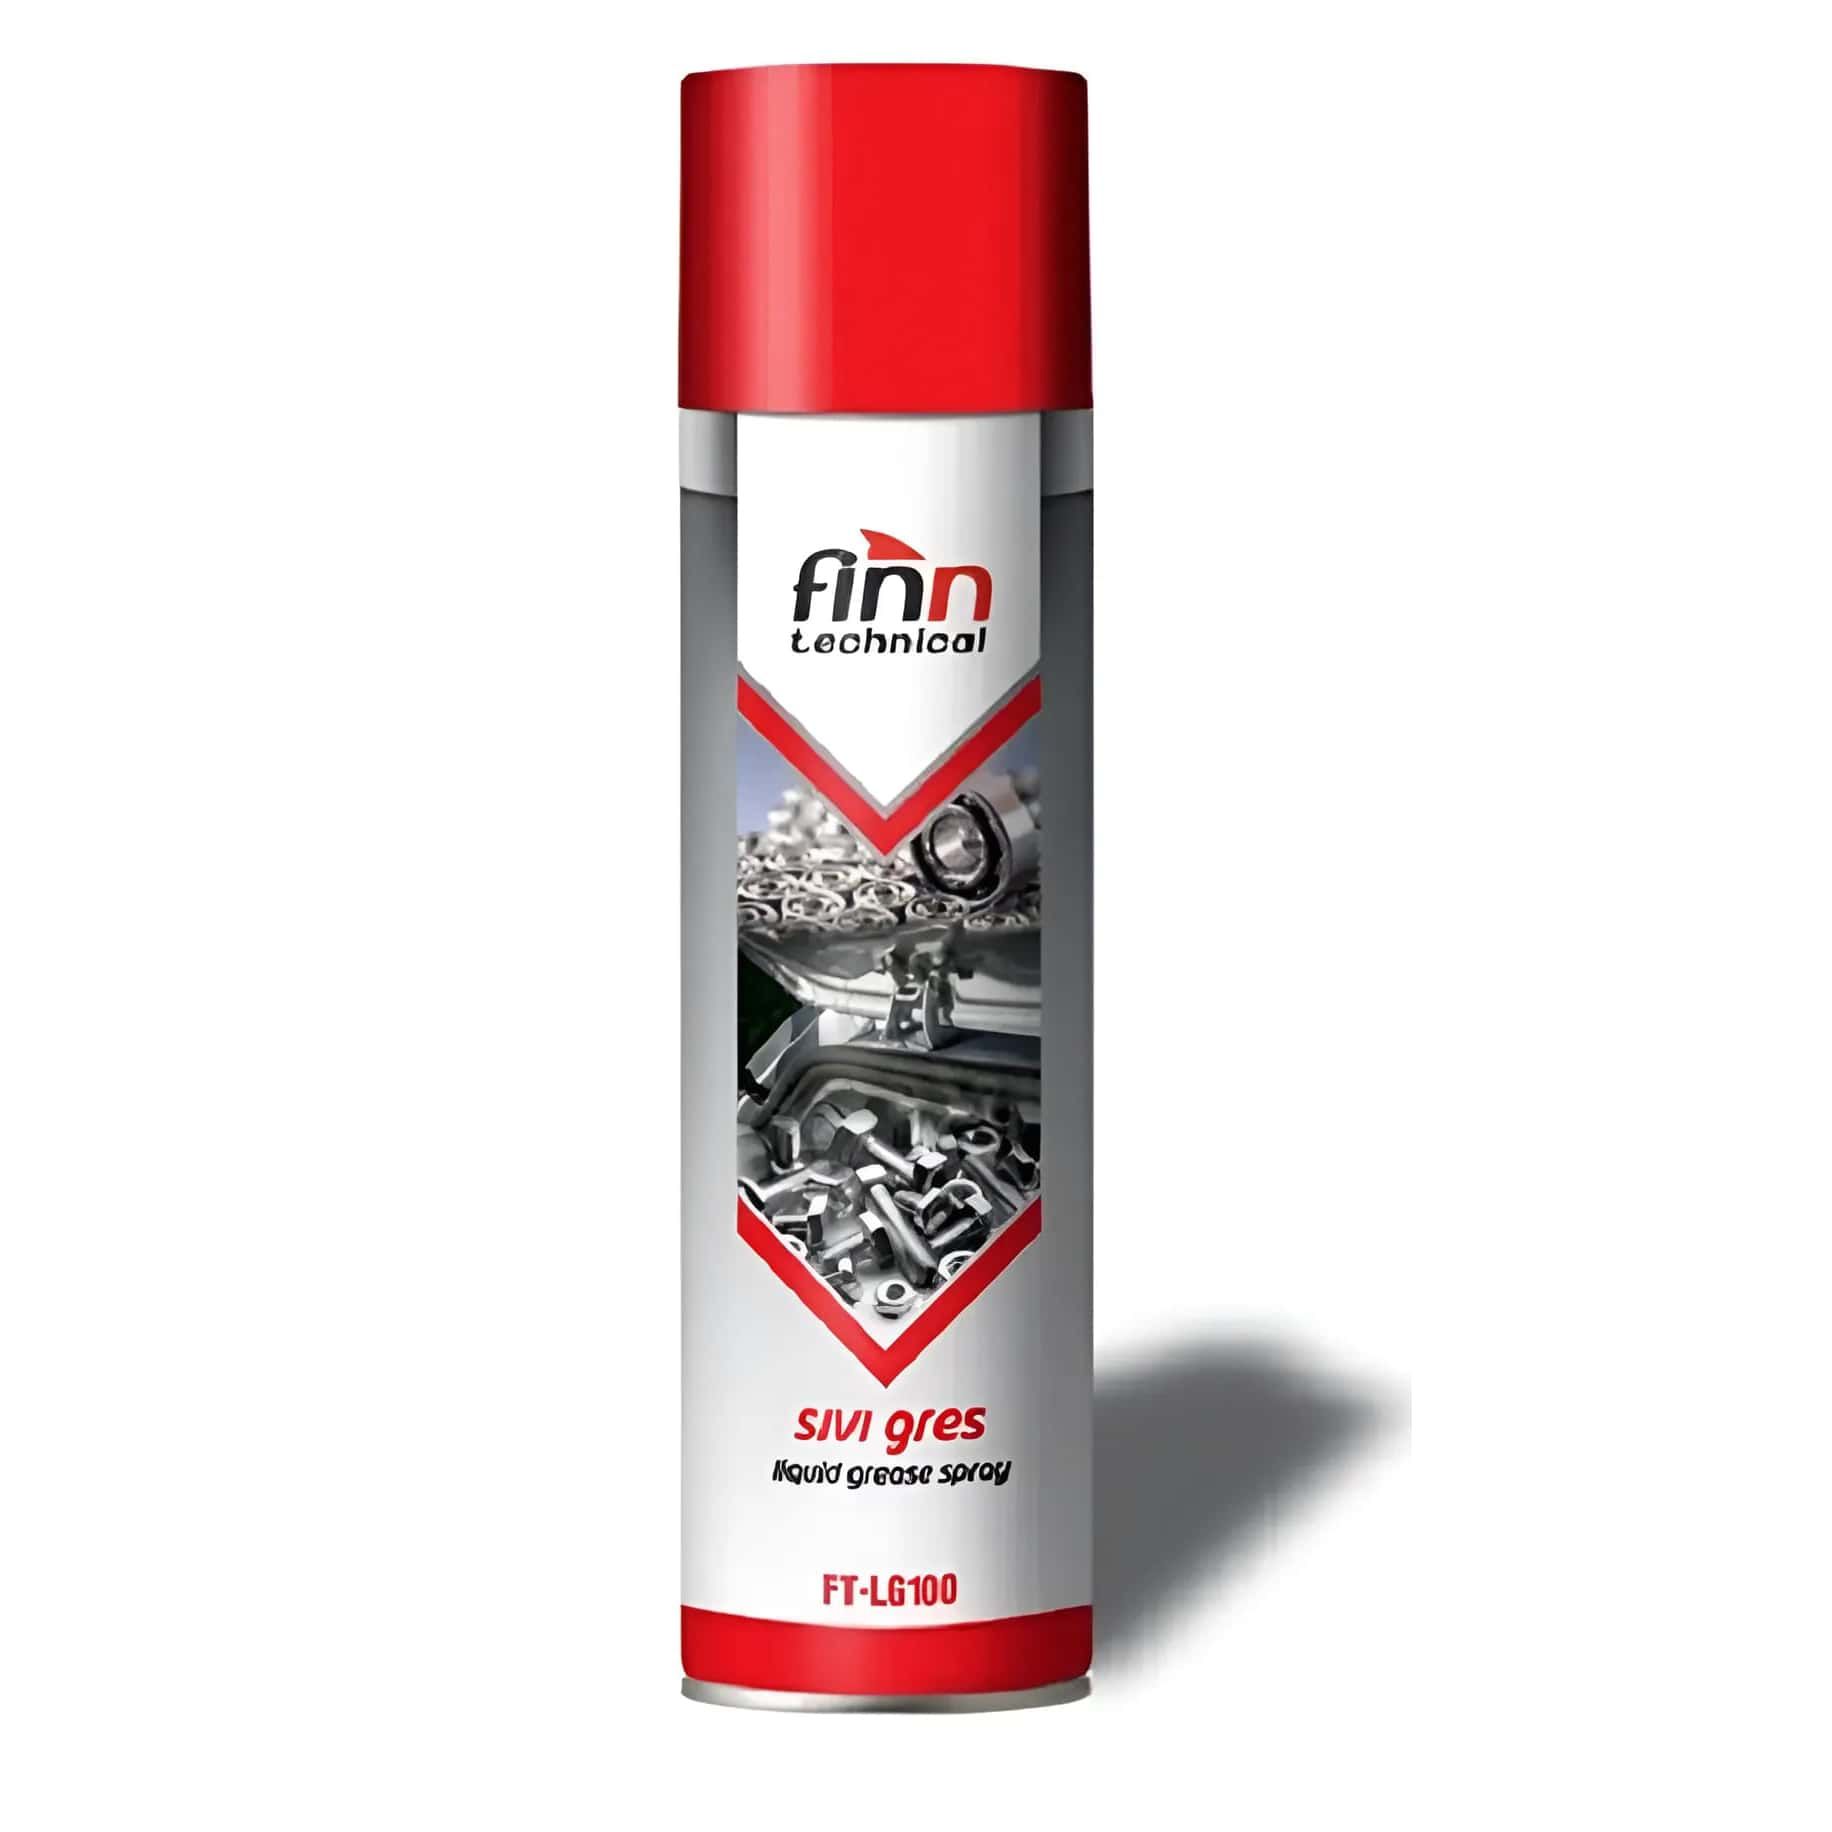 Finn Technical Sıvı Gres (Sprey) 500 ML (Liquid Grease Spray)